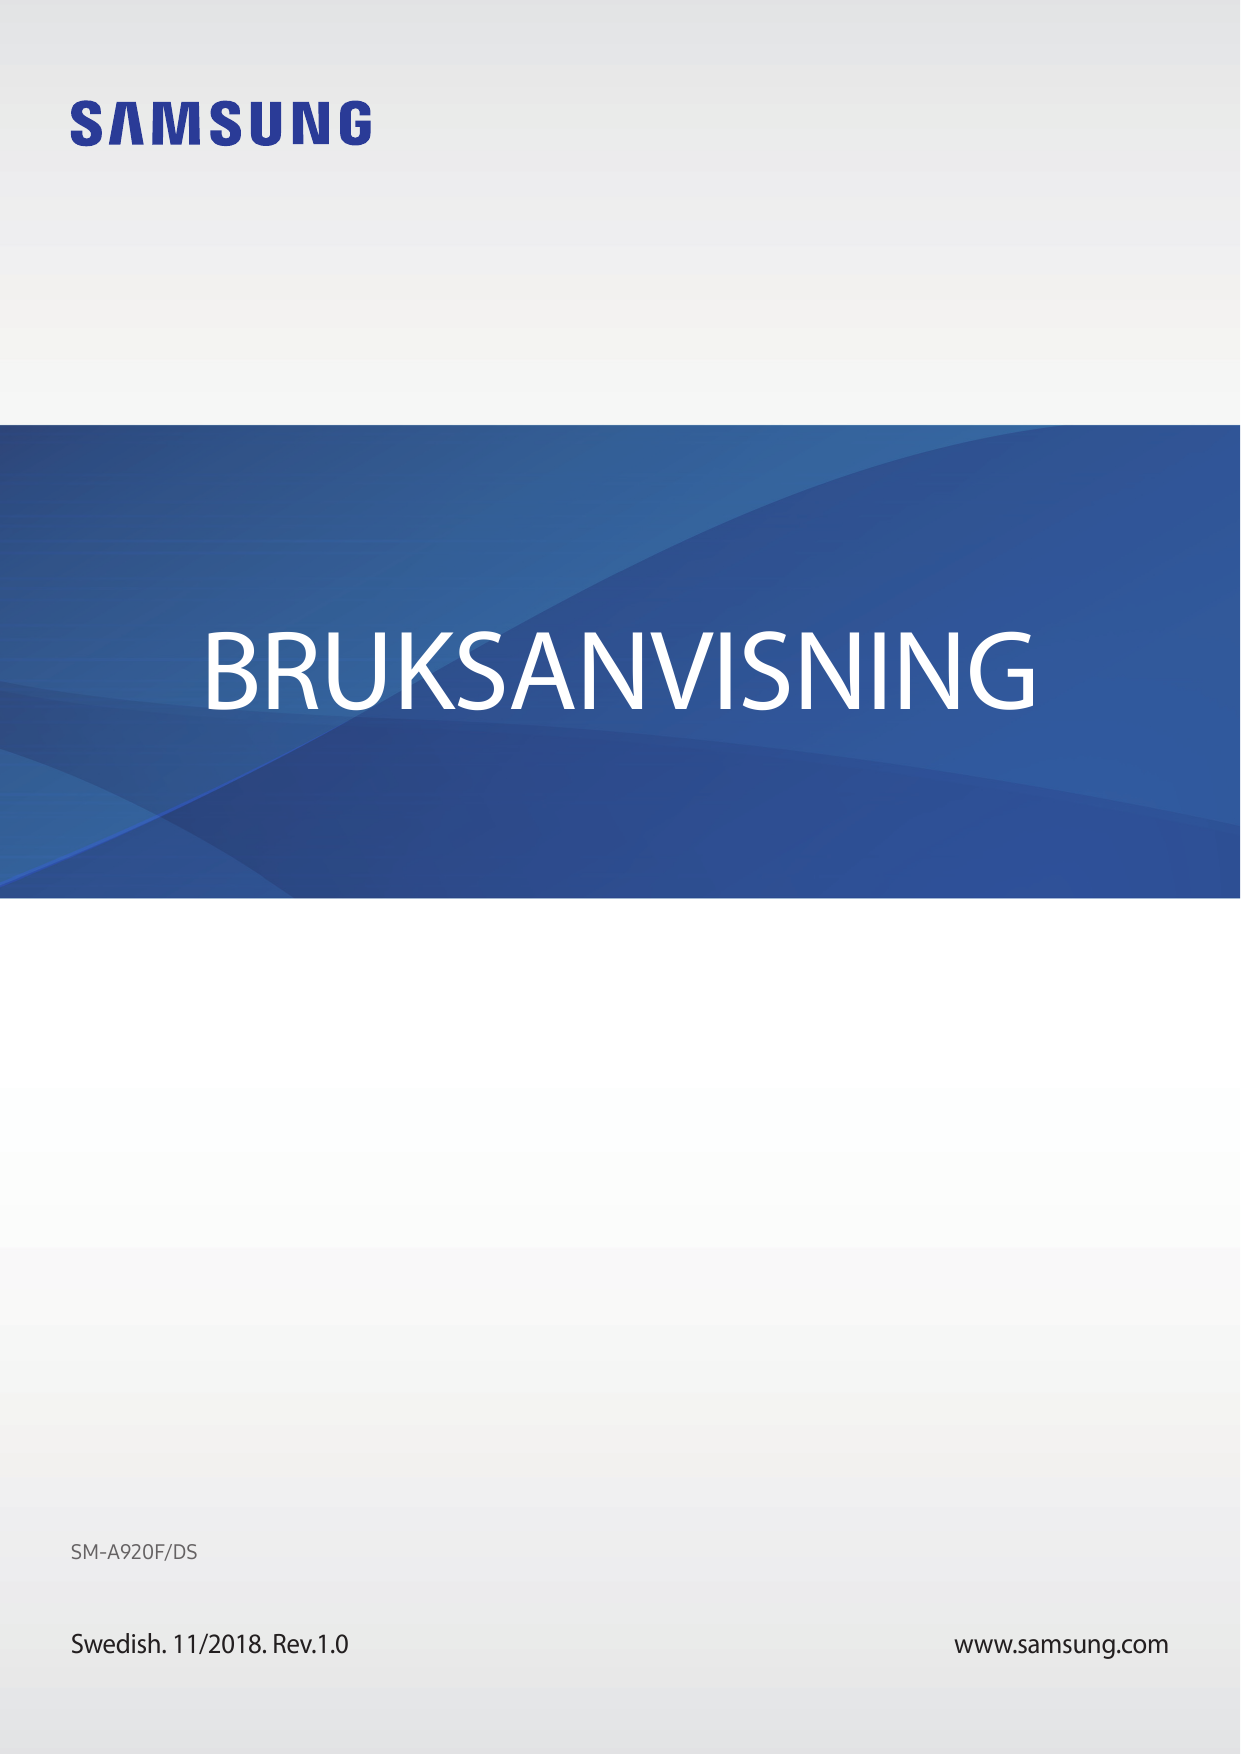 BRUKSANVISNINGSM-A920F/DSSwedish. 11/2018. Rev.1.0www.samsung.com